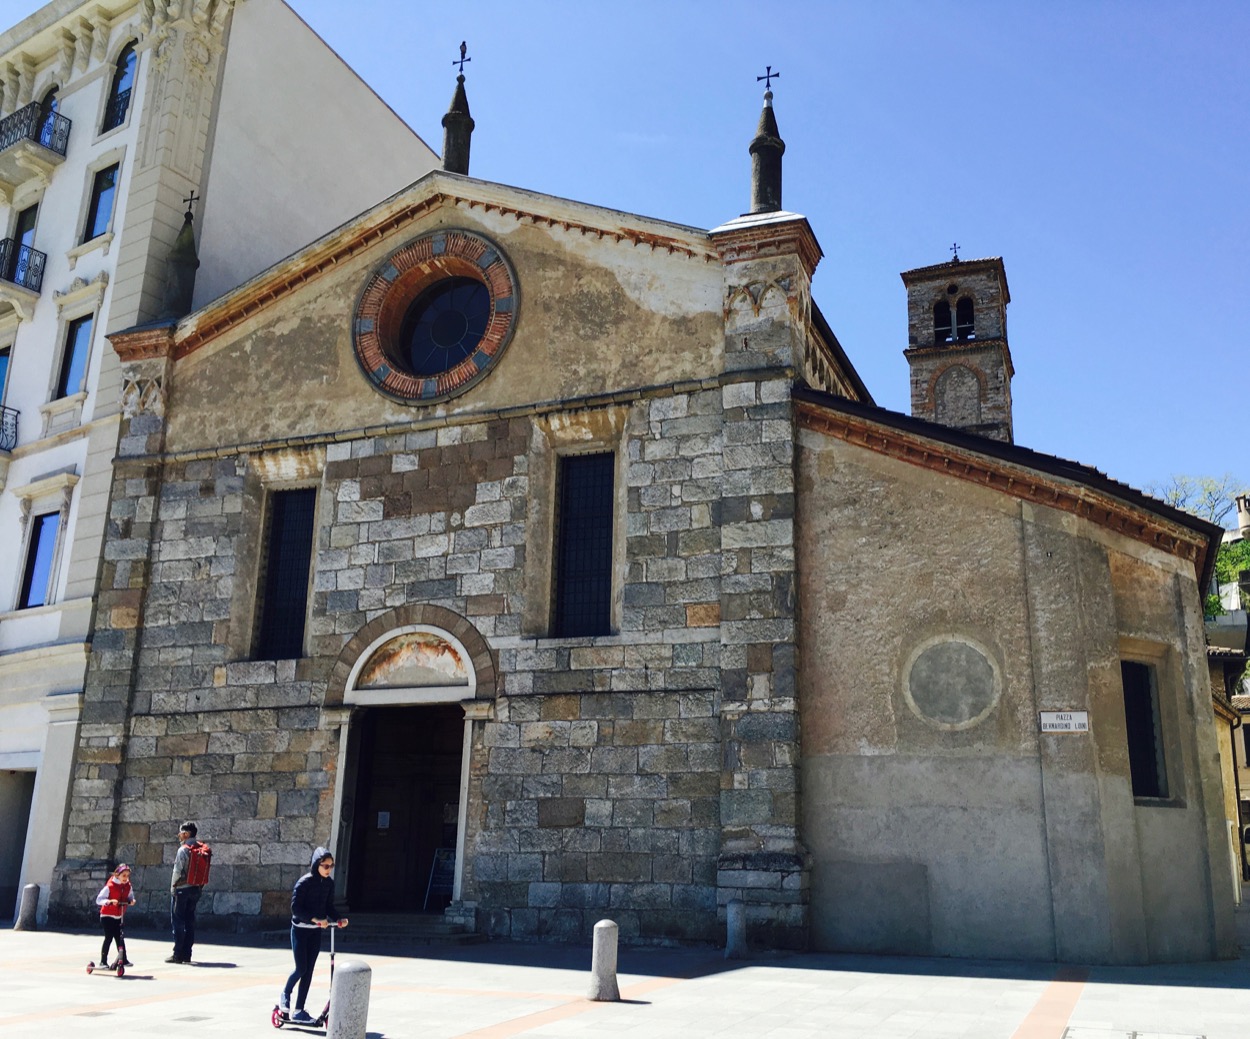 The Church of Saint Maria degli Angioli